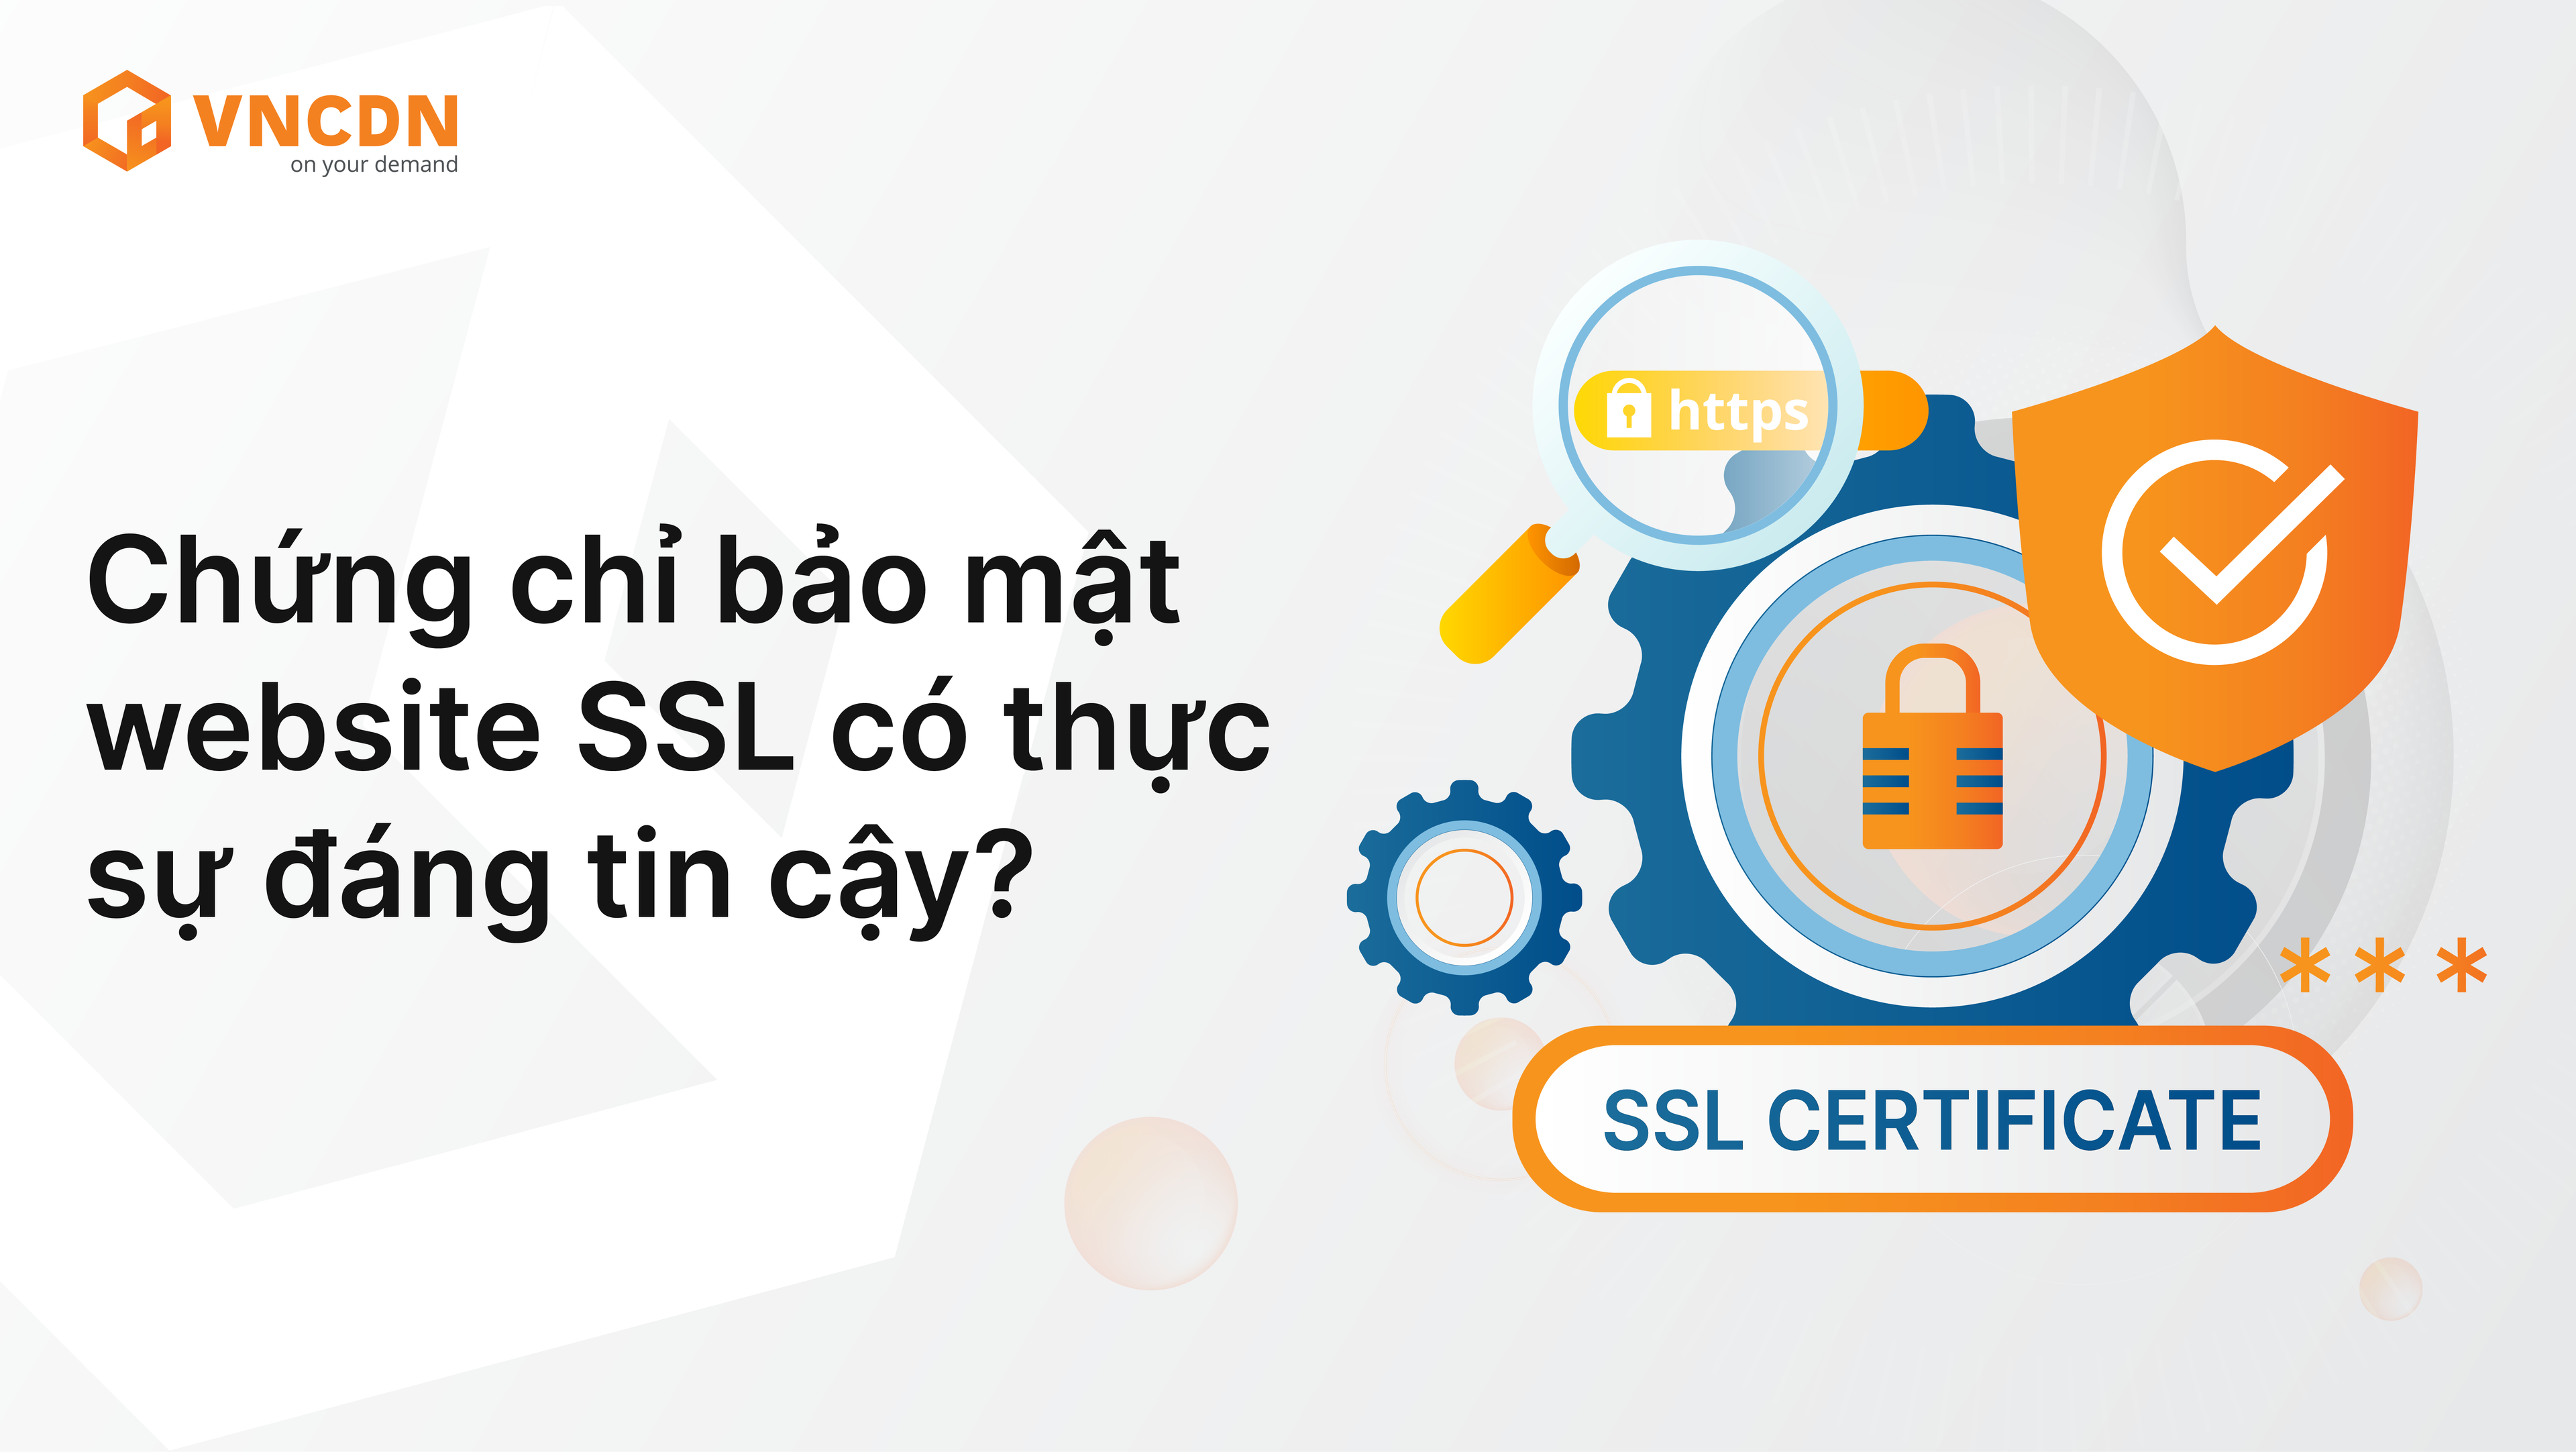 Is SSL website security certificate really trustworthy?